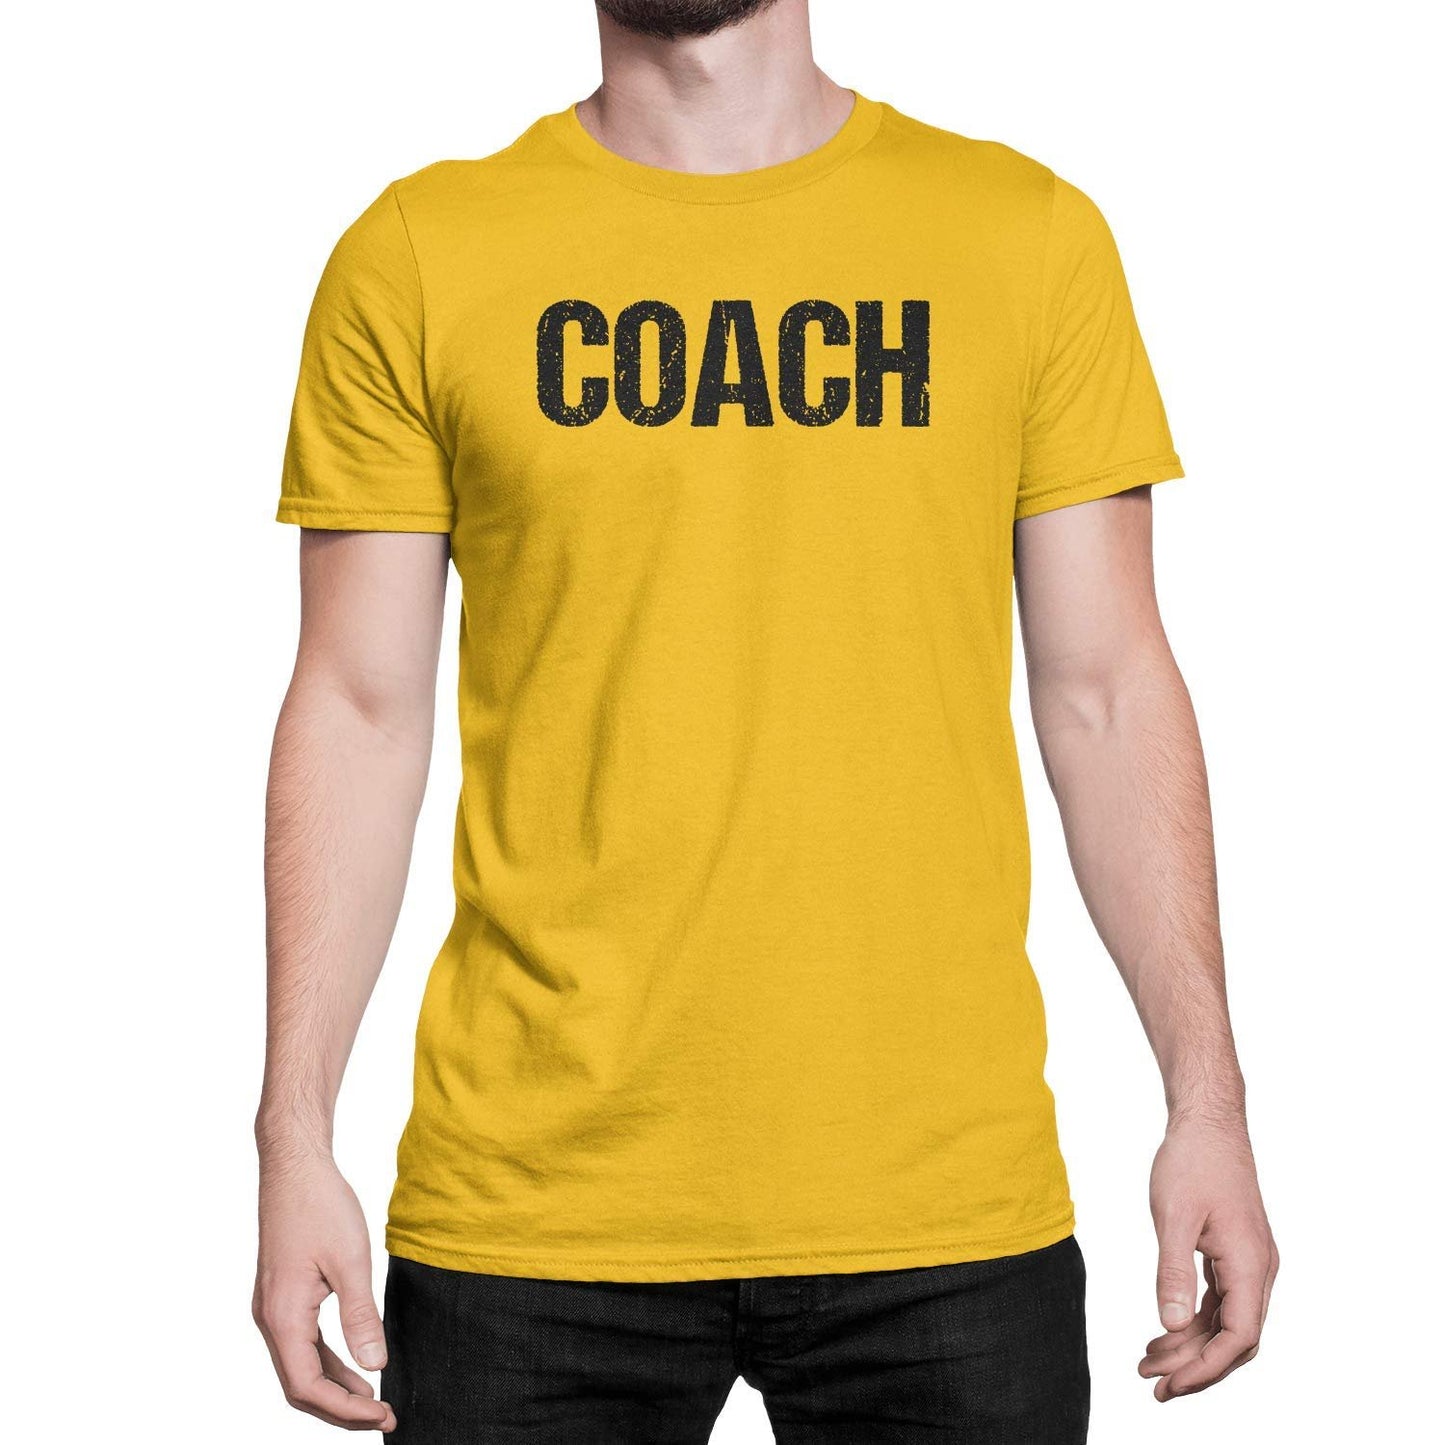 Coach T-Shirt Adult Mens Tee Shirt Front Screen Printed Coaching Tshirt Gold & Black